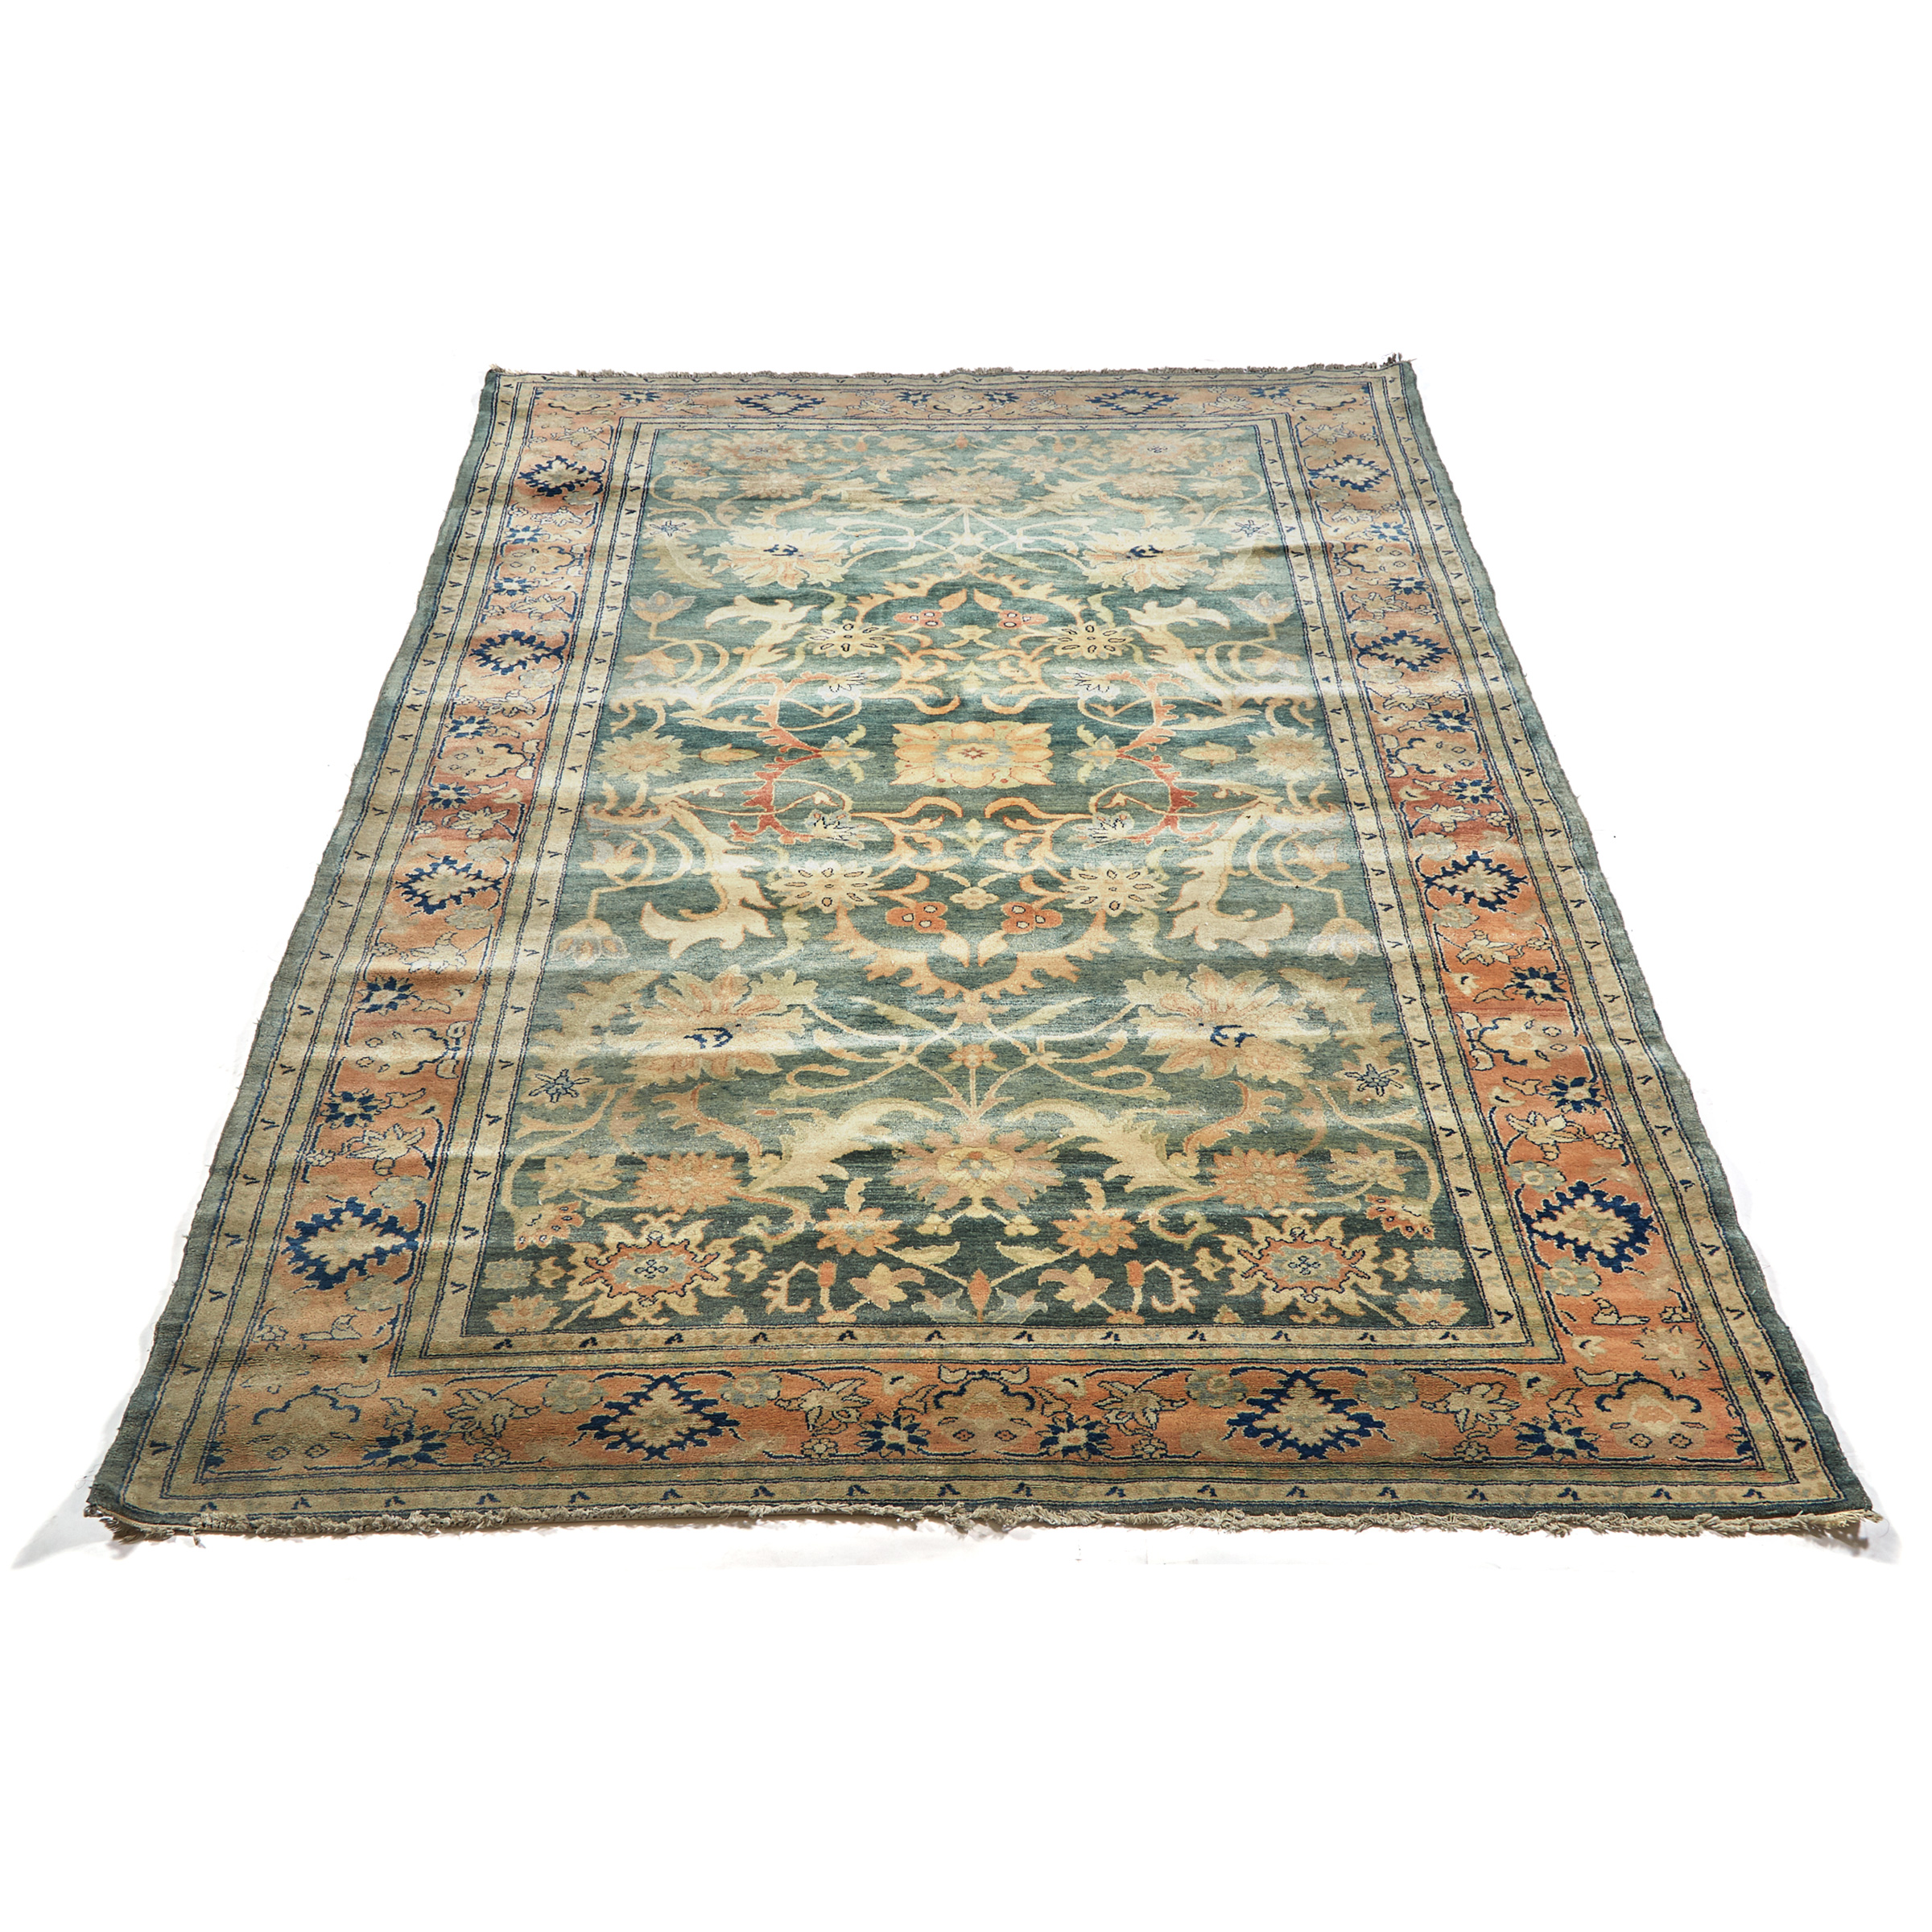 Agra Carpet, Indian, late 20th century